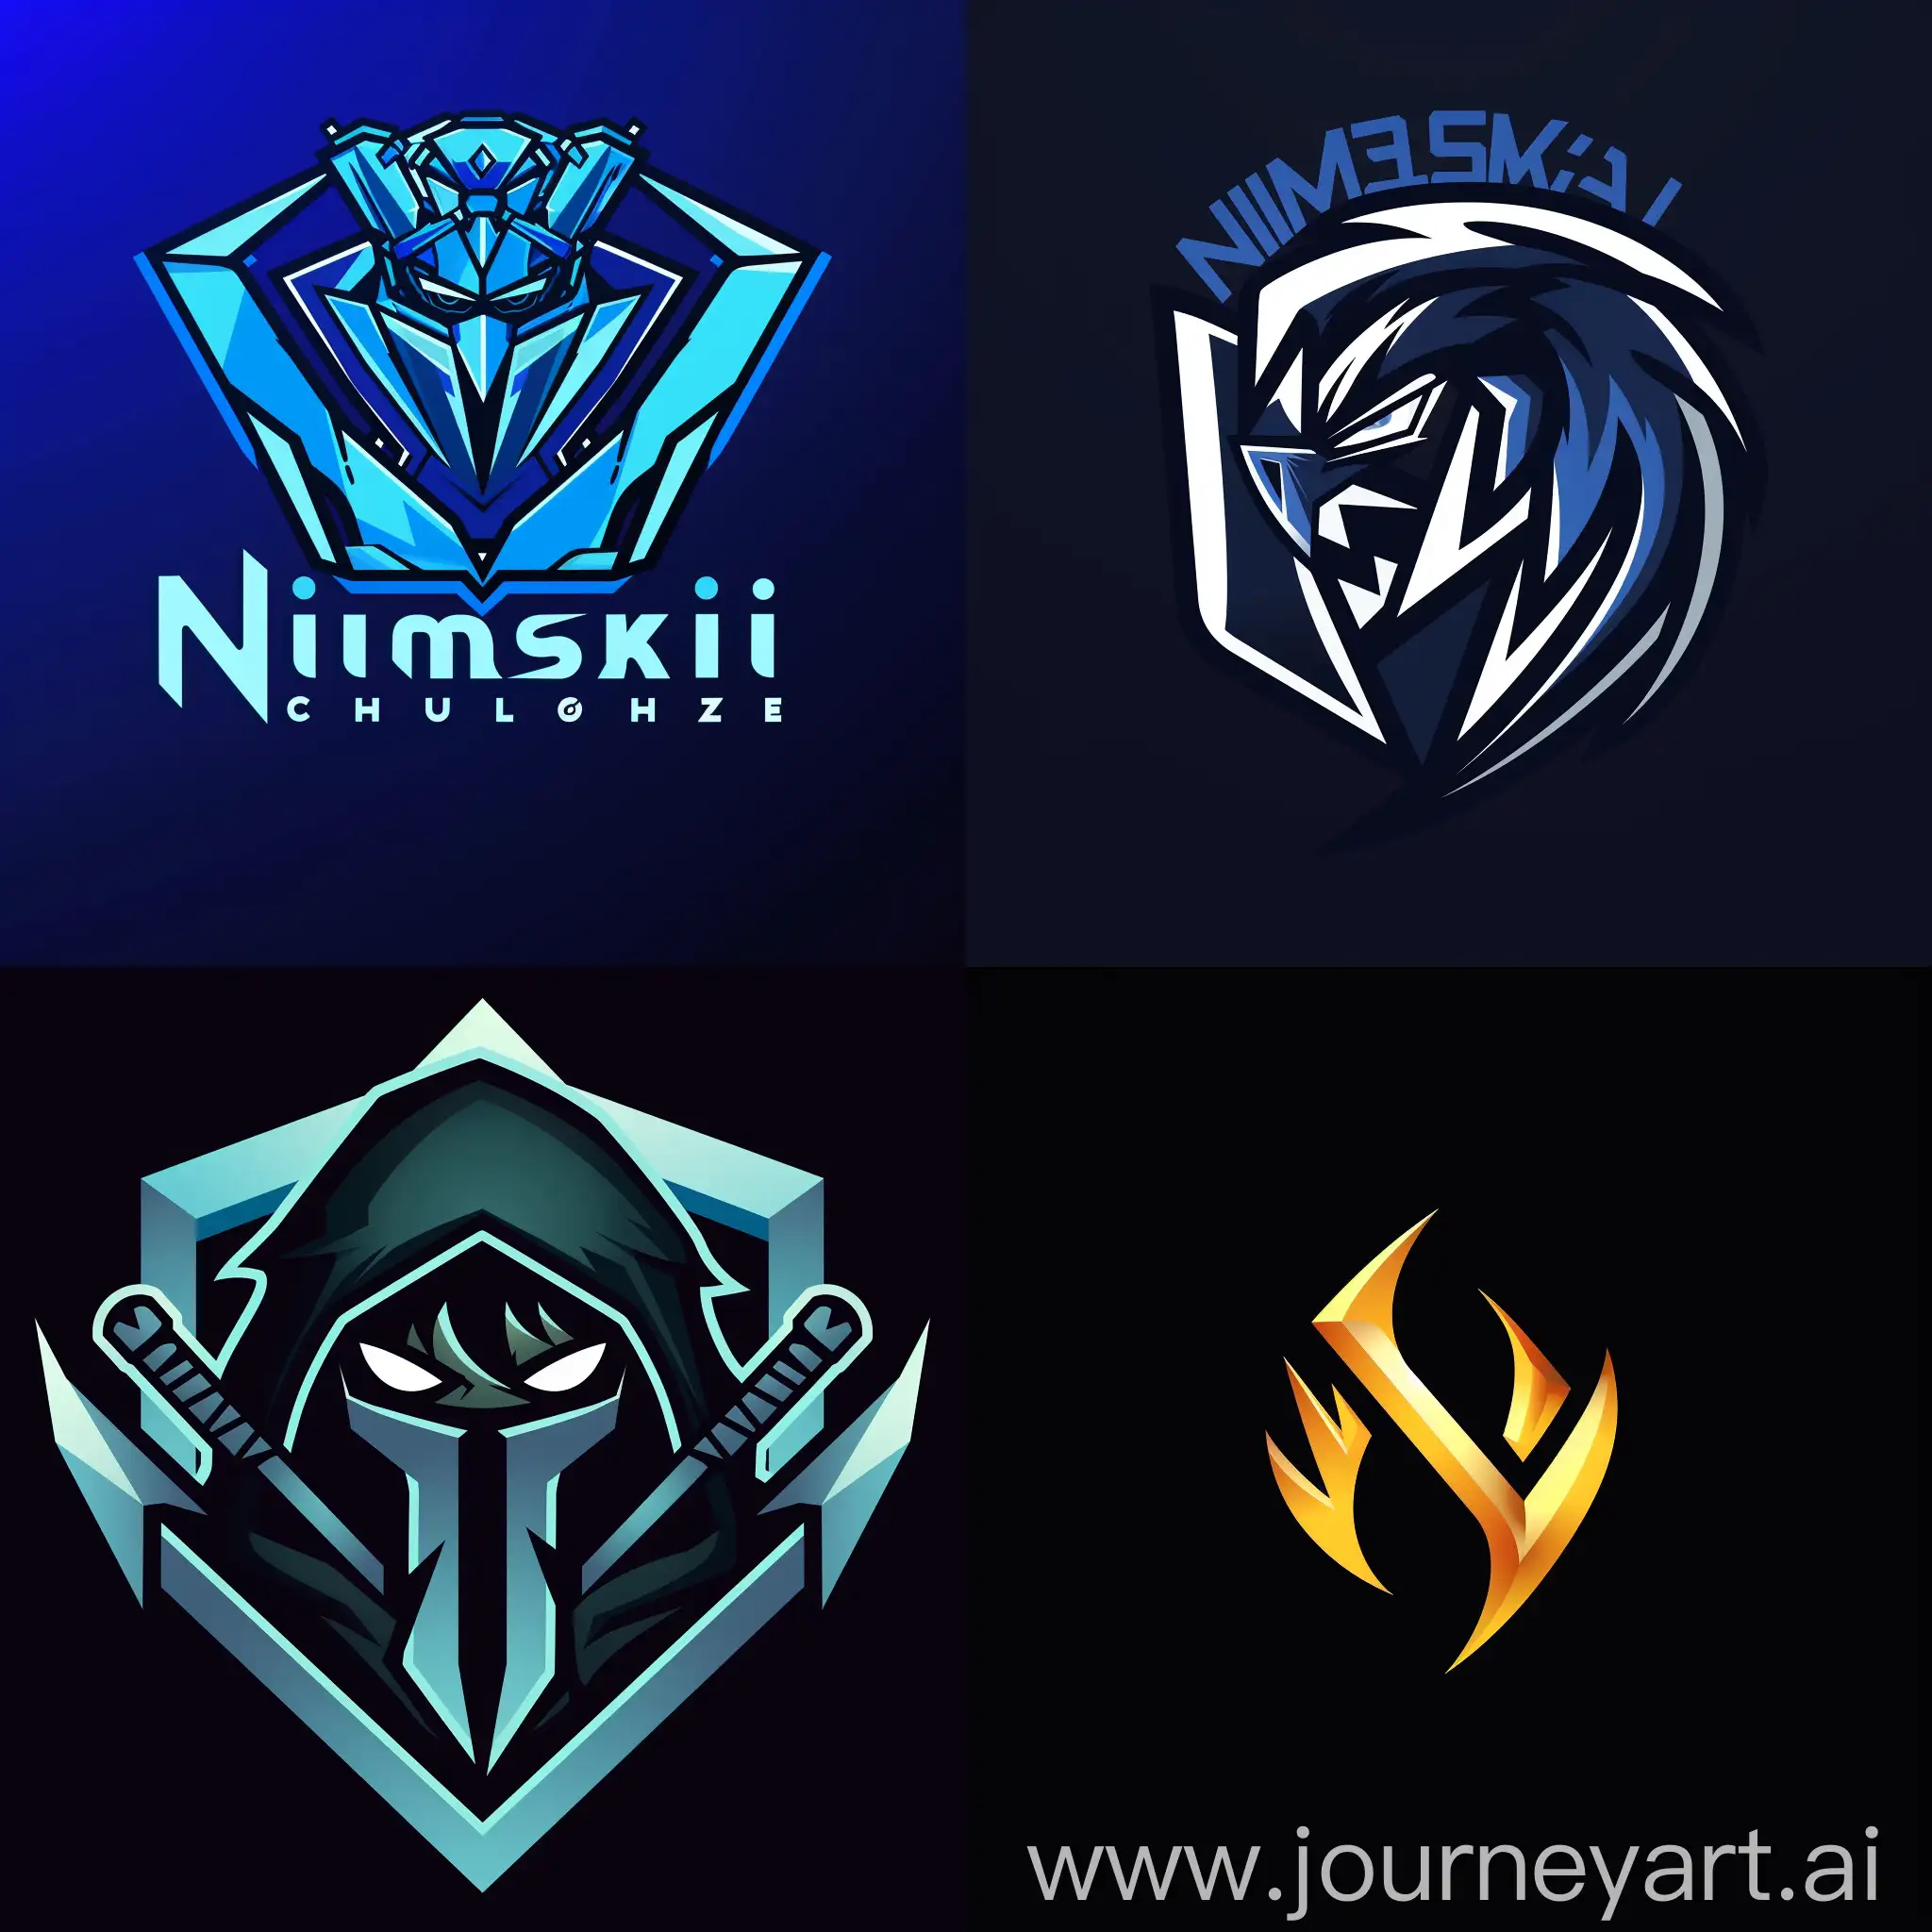 Nimaski-Challenge-Logo-Design-with-Vibrant-Colors-and-Geometric-Patterns